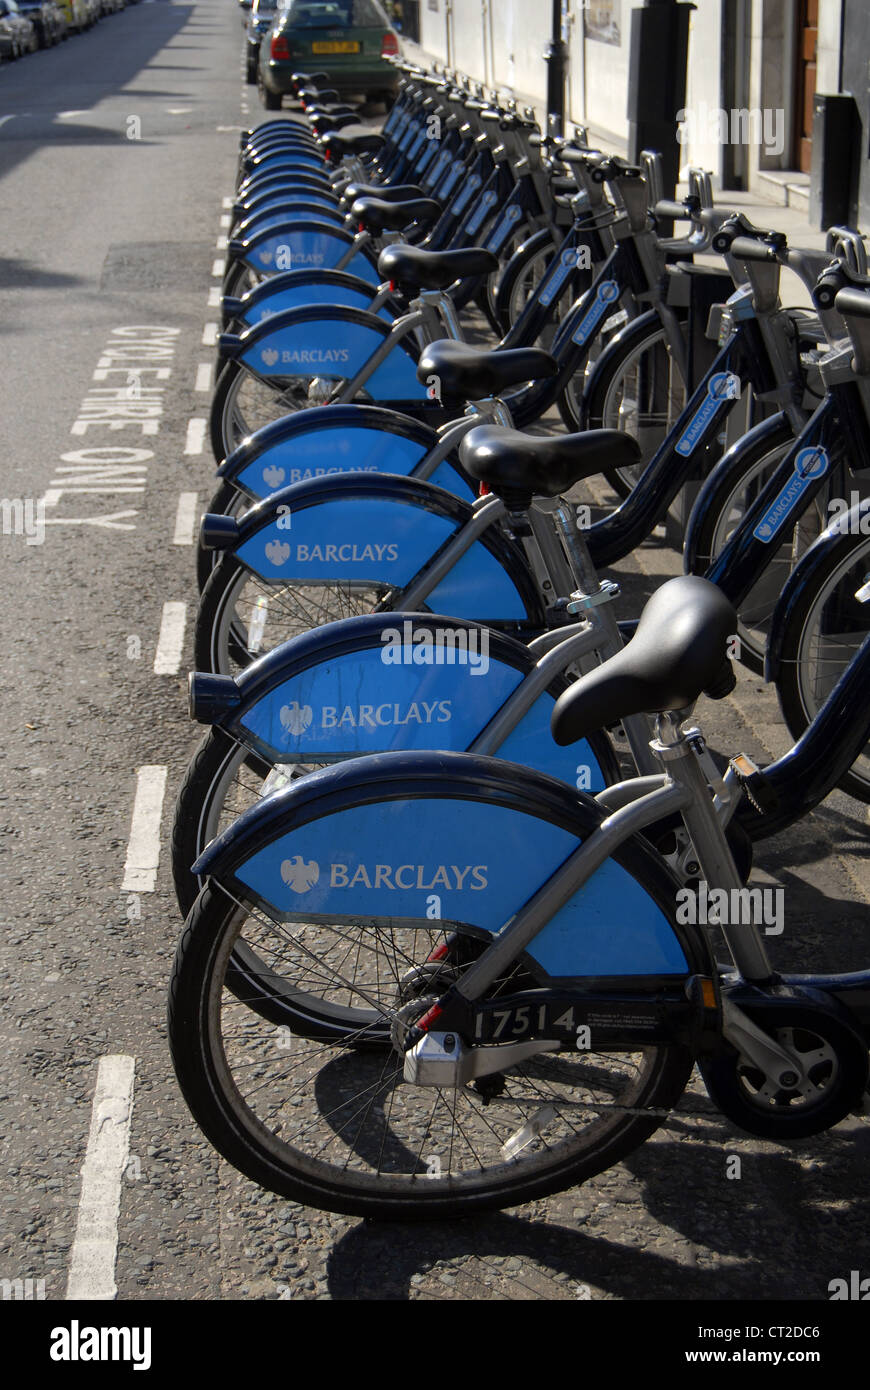 London Barclay's Bike Scheme Stock Photo